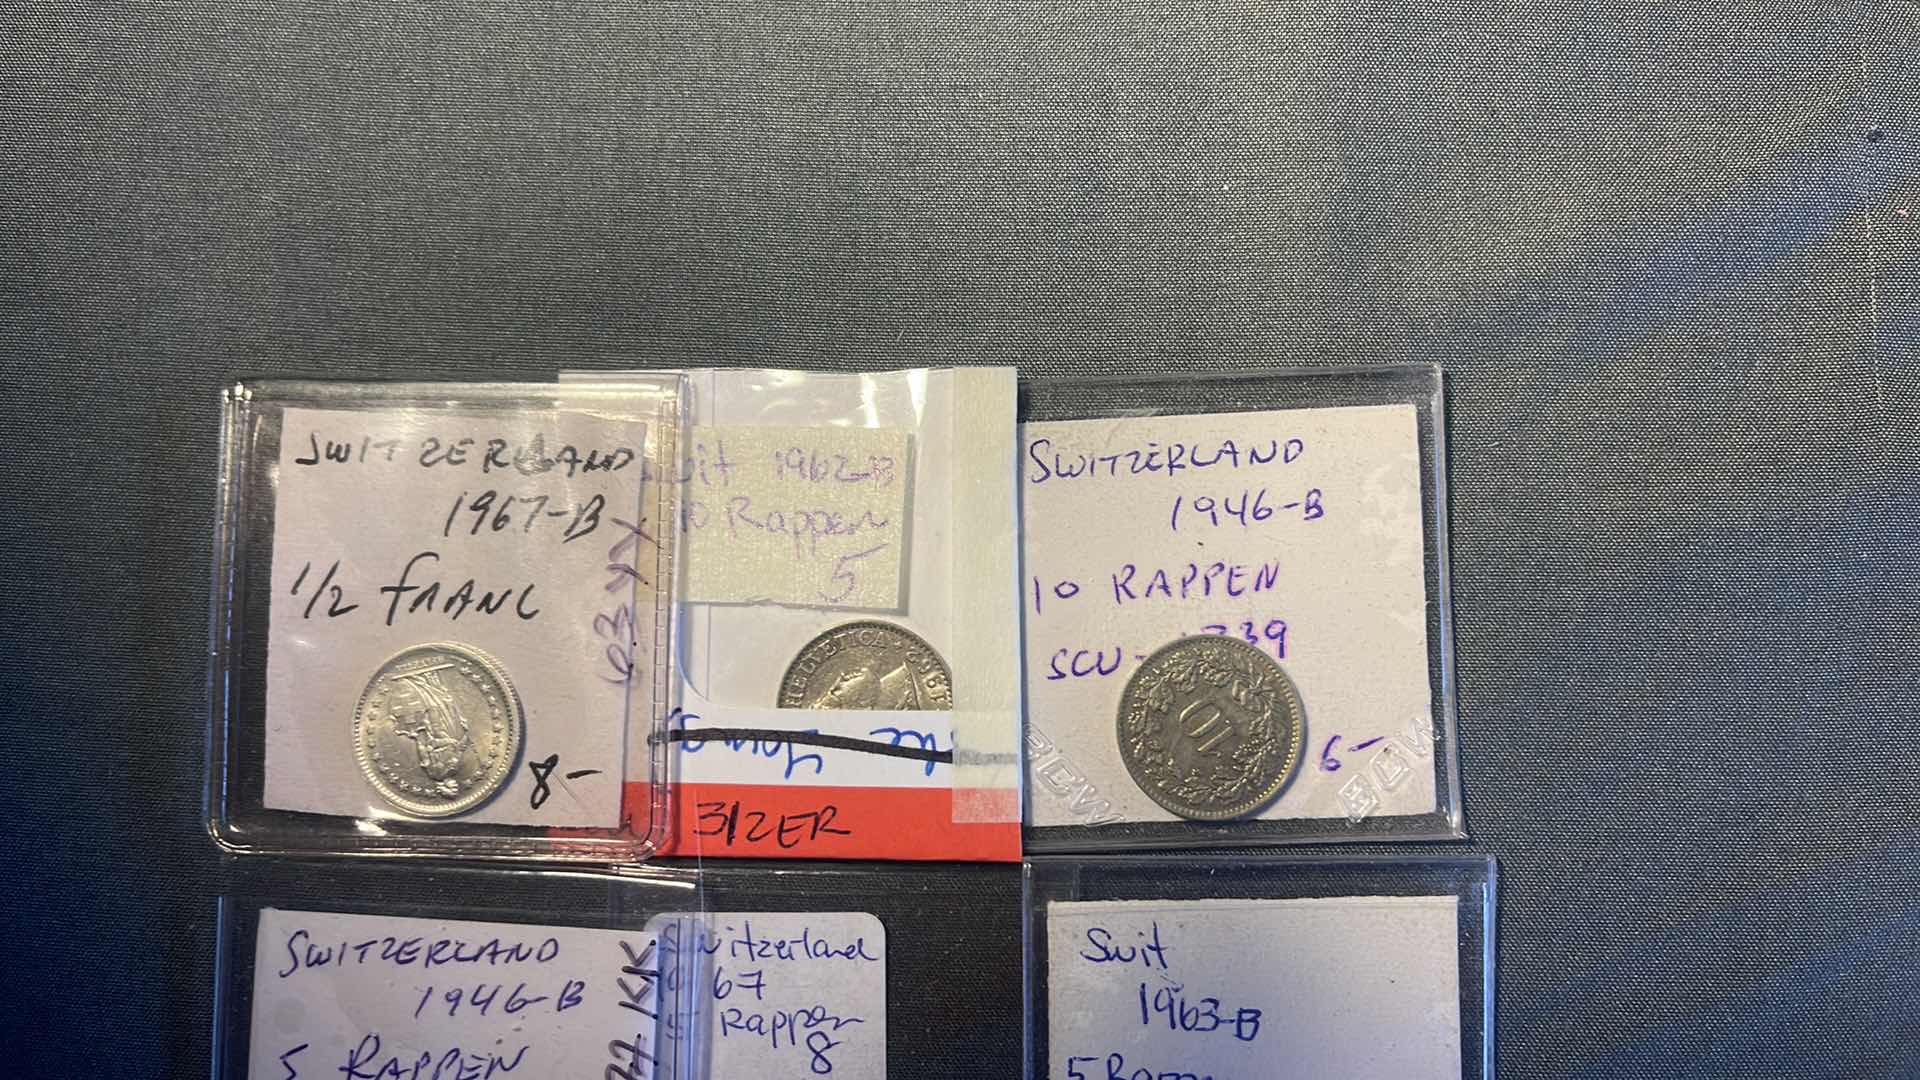 Photo 2 of 6 SWITZERLAND VINTAGE COLLECTOR COINS